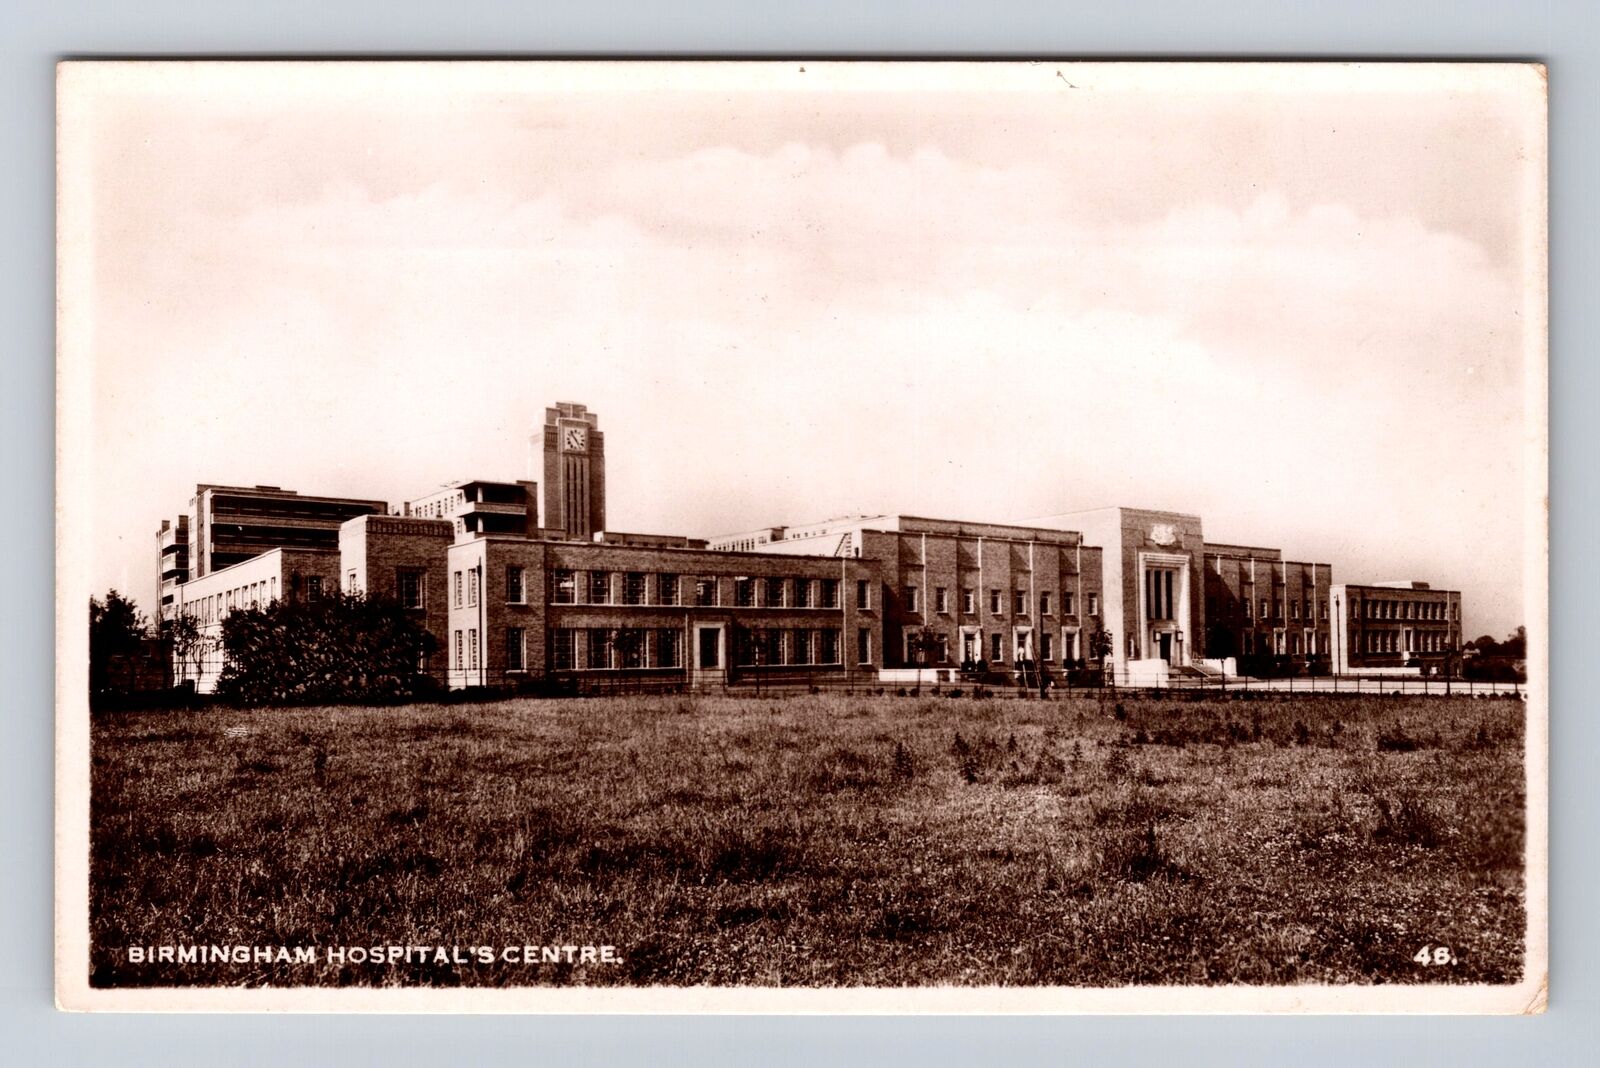 Birmingham England, Birmingham Hospitals Centre, Vintage Postcard